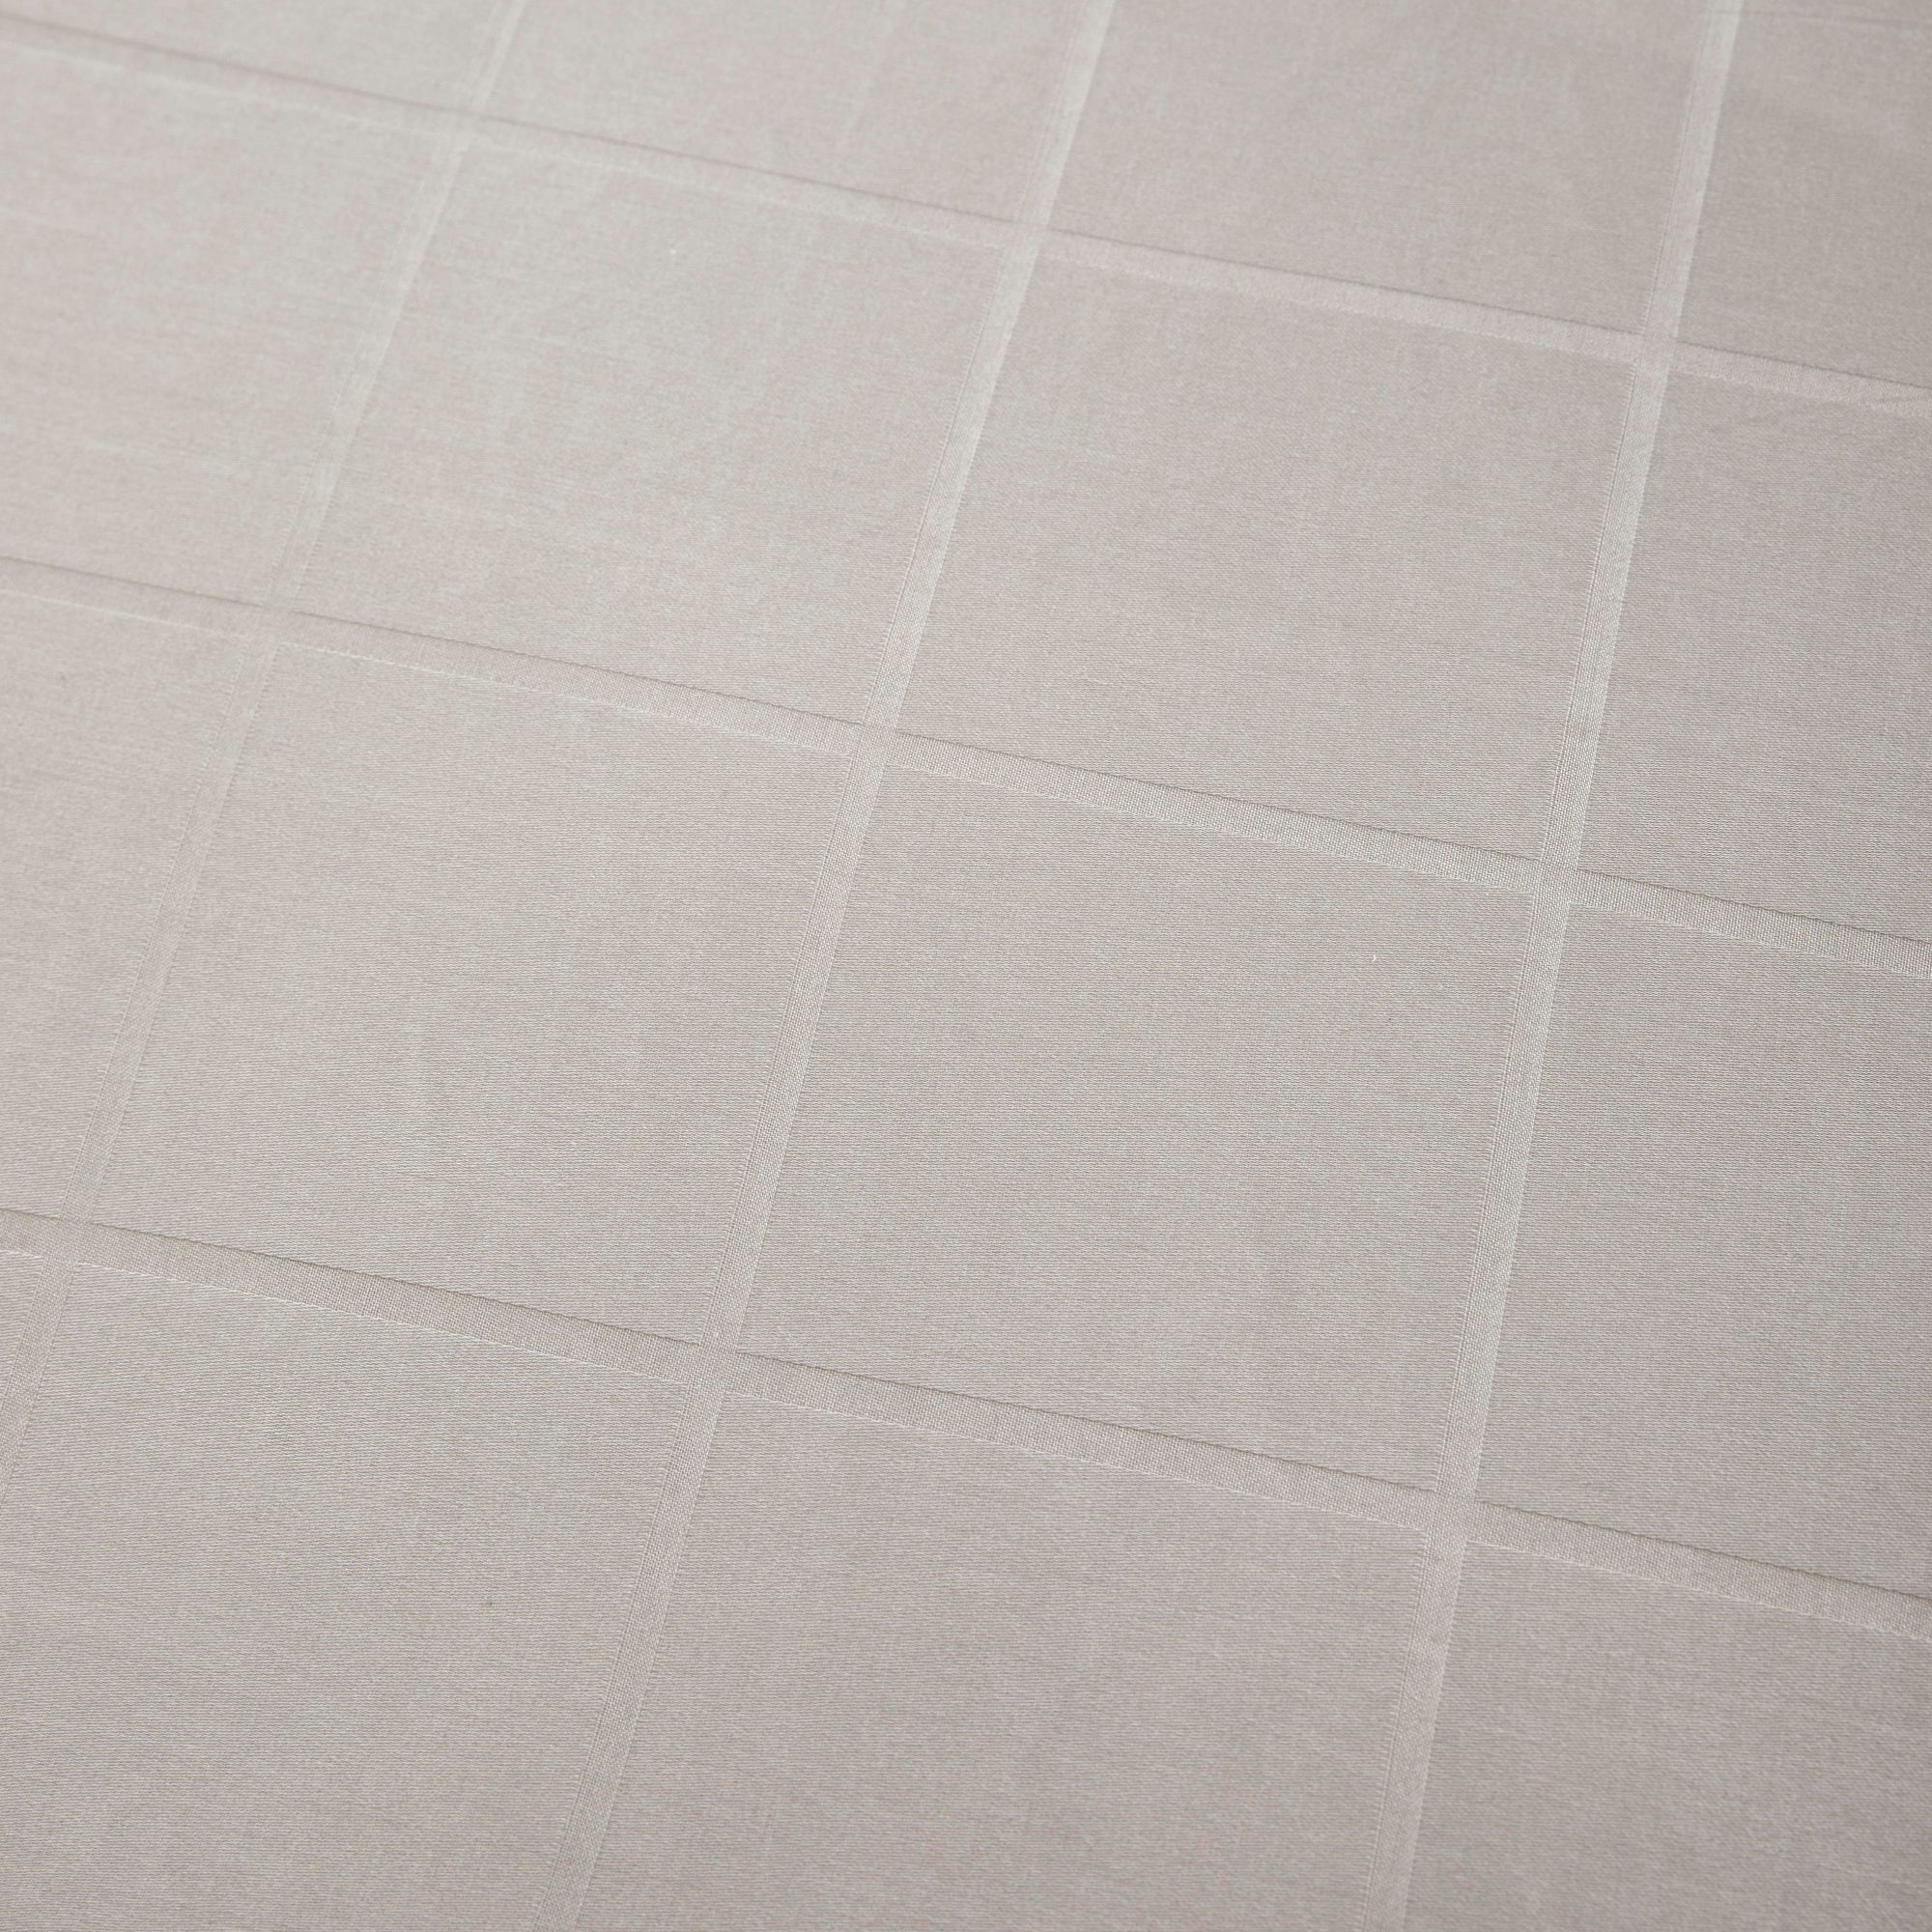 Duvet Cover Set Sorelle by Appletree Boutique in Linen